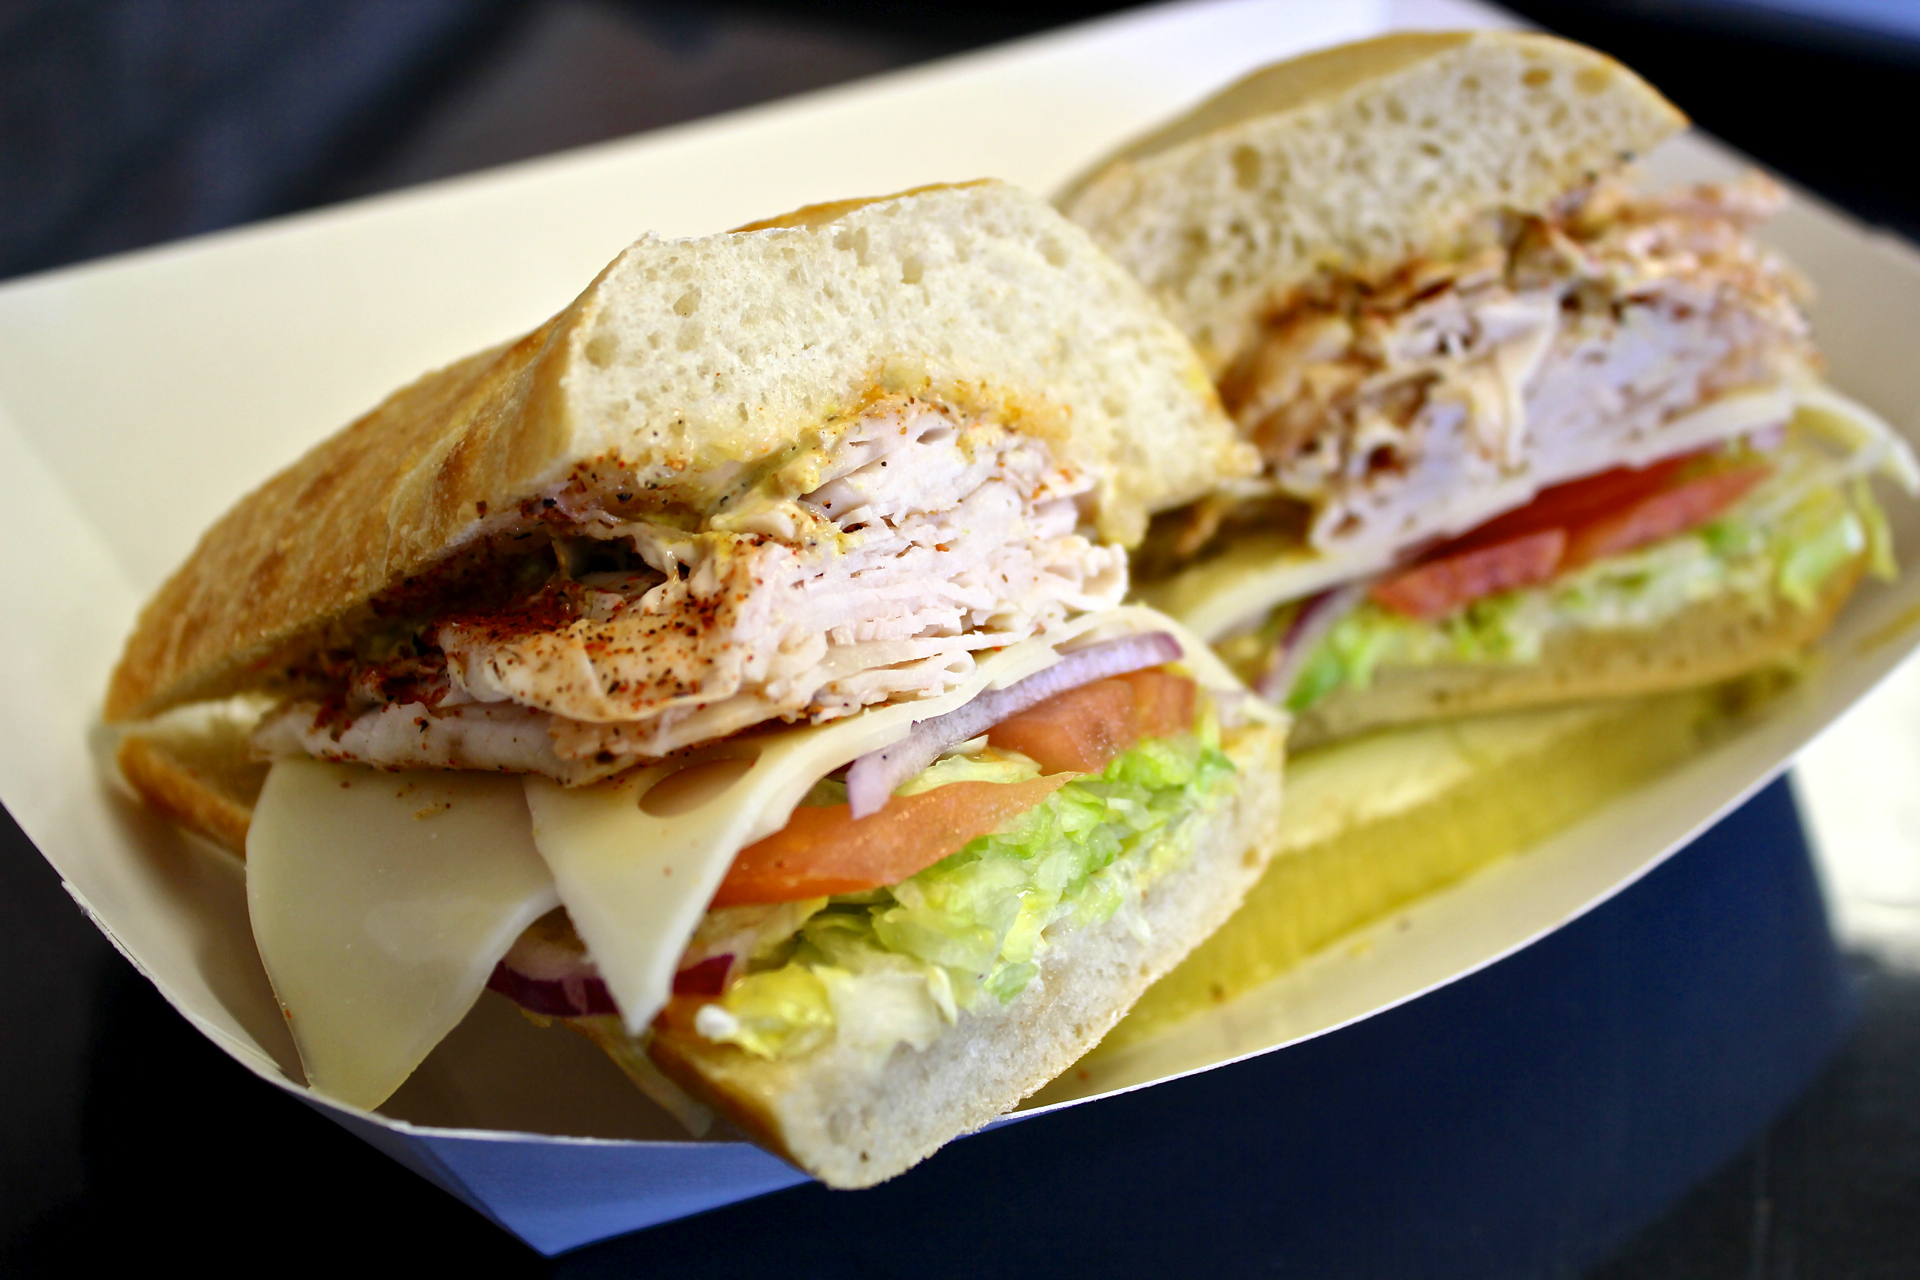 The spicy turkey sandwich at California Sourdough.